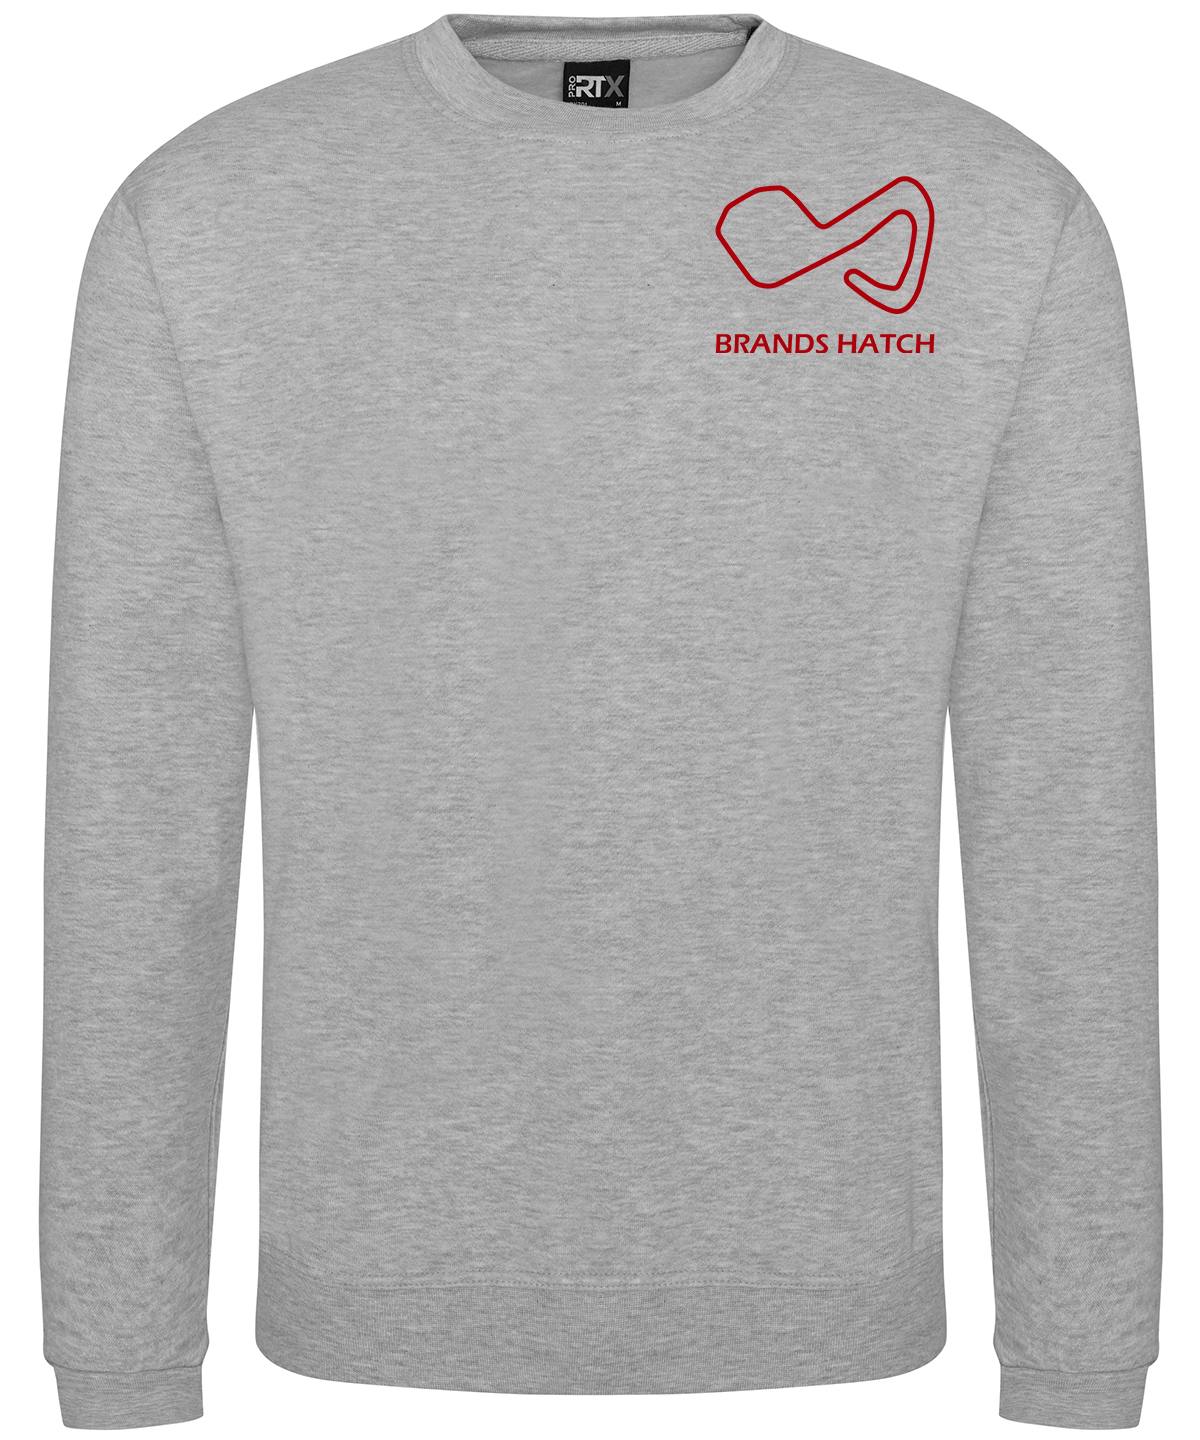 Brands Hatch Sweatshirt